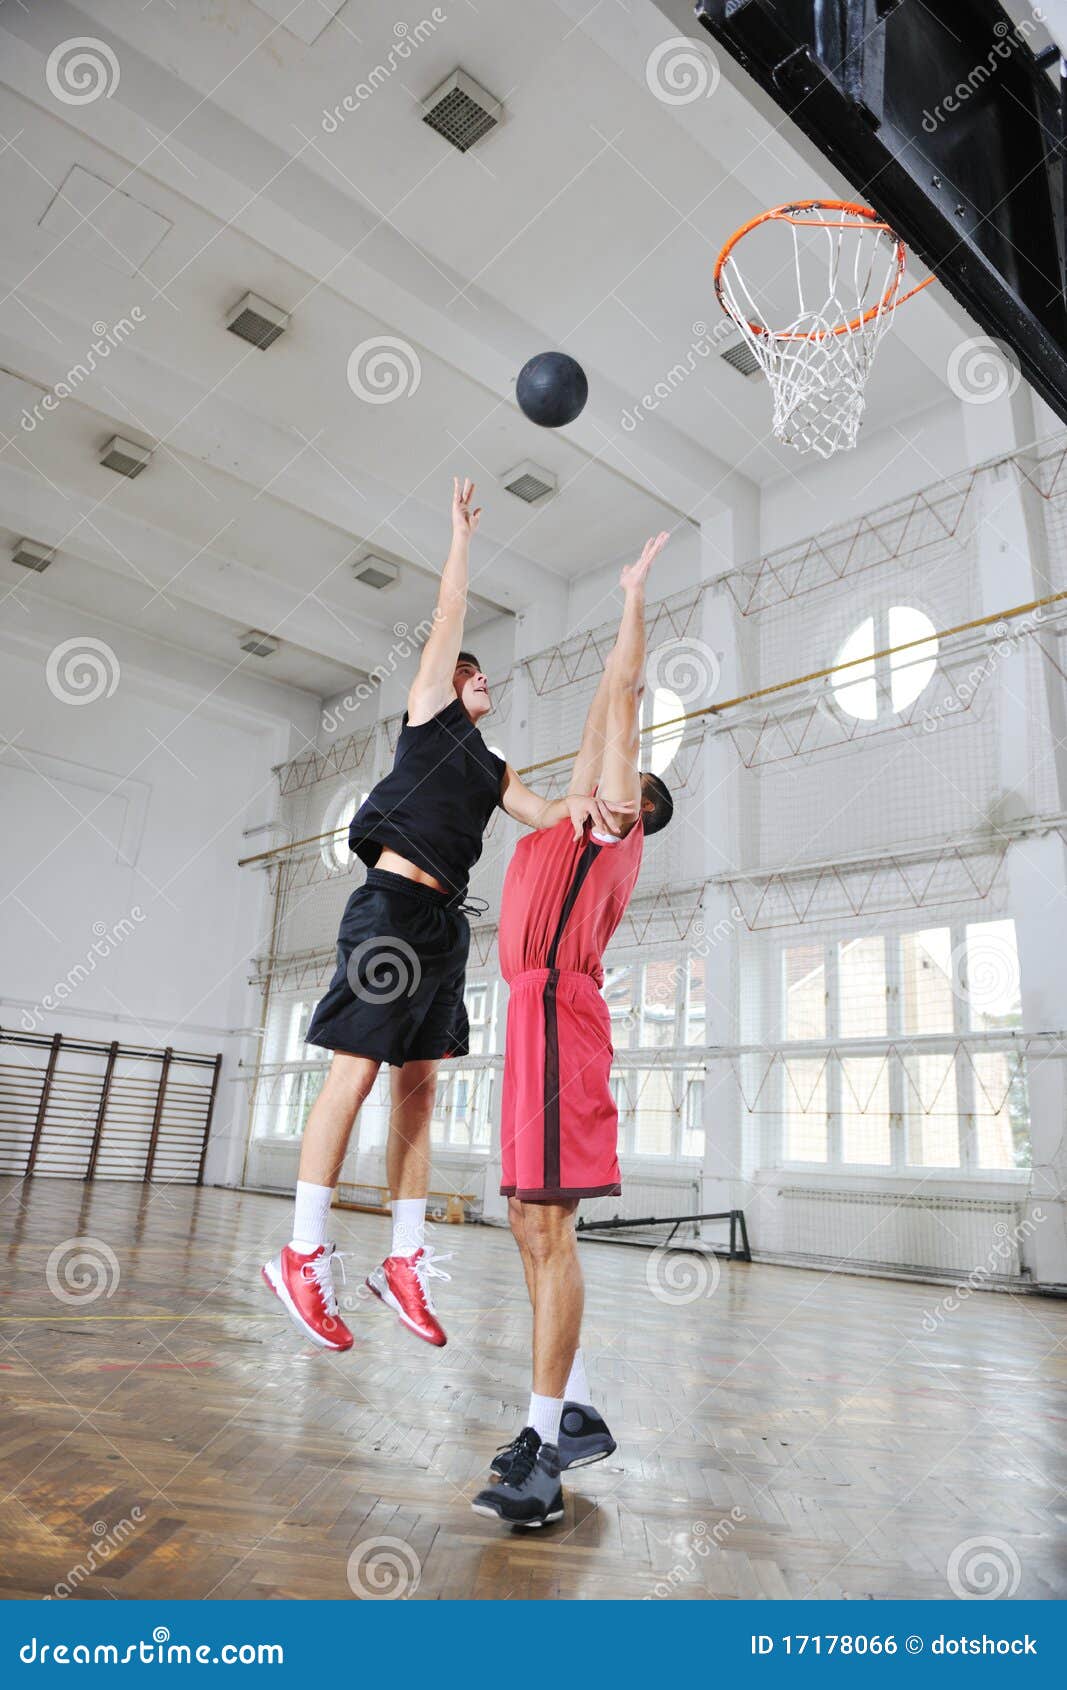 Magic basketball stock photo. Image of leisure, look - 17178066